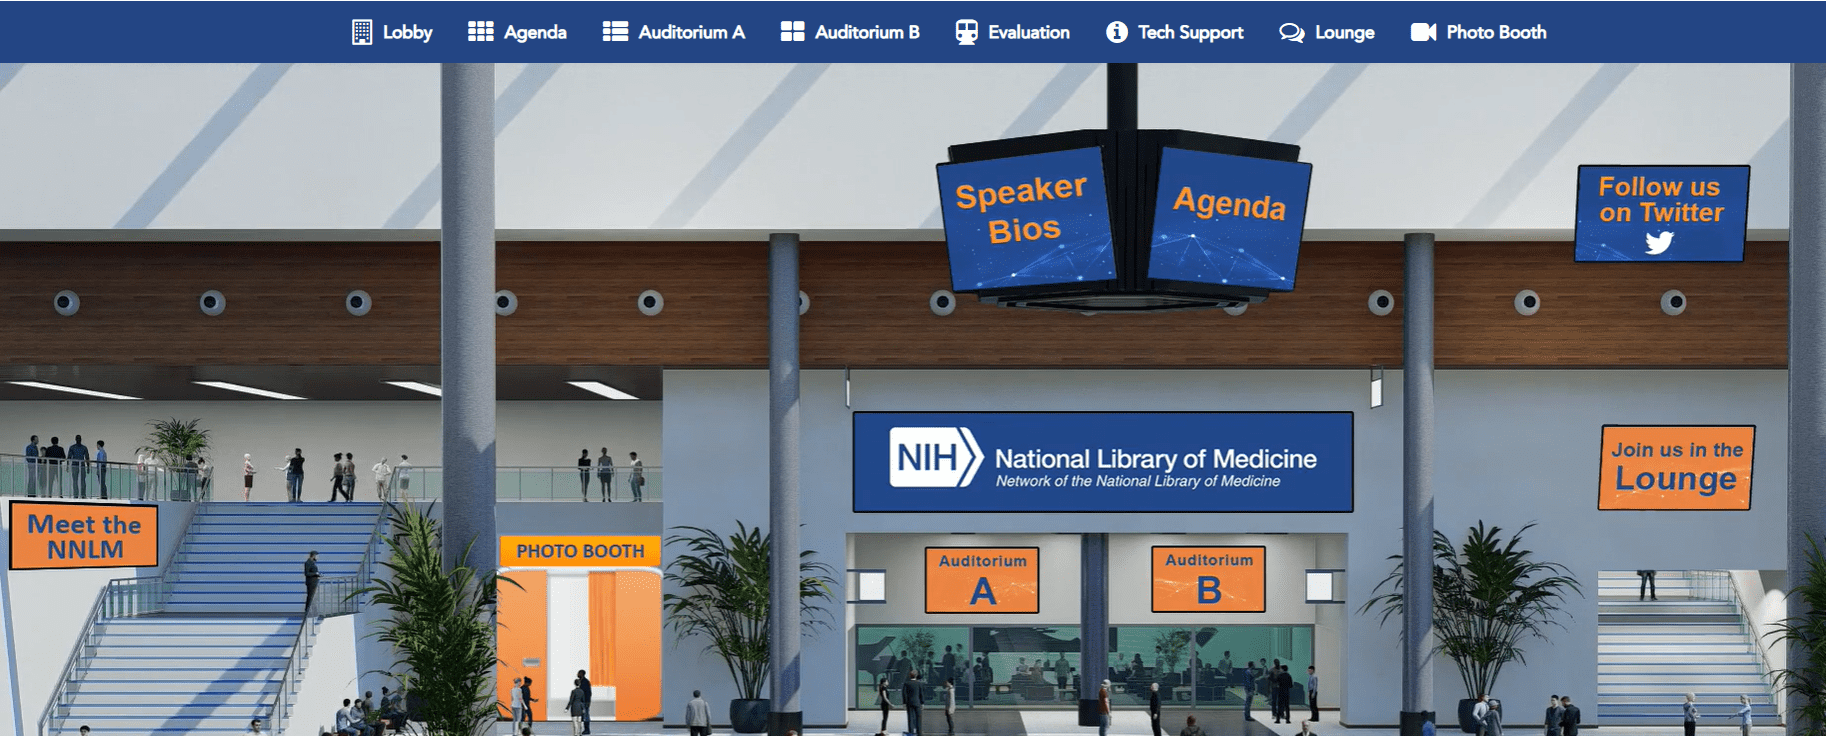 3D lobby of NNLM Virtual Symposium